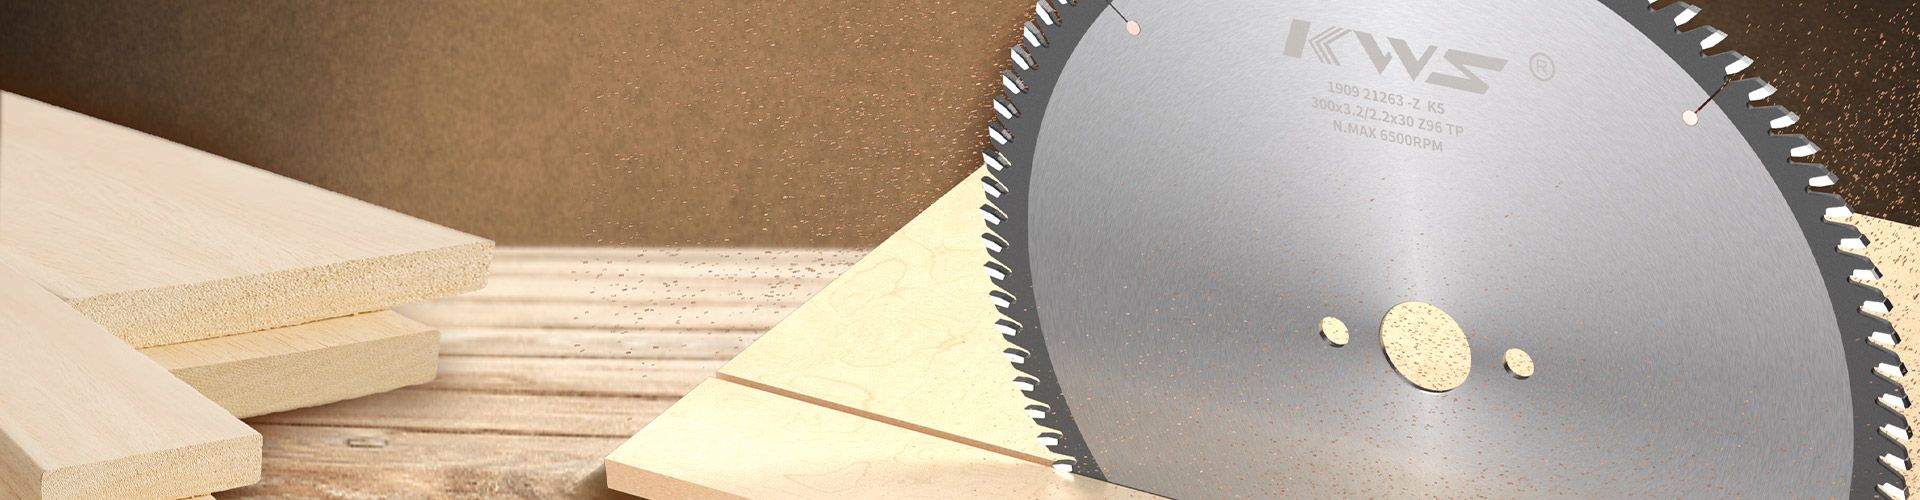 Hoja de sierra ranuradora para procesamiento de aluminio